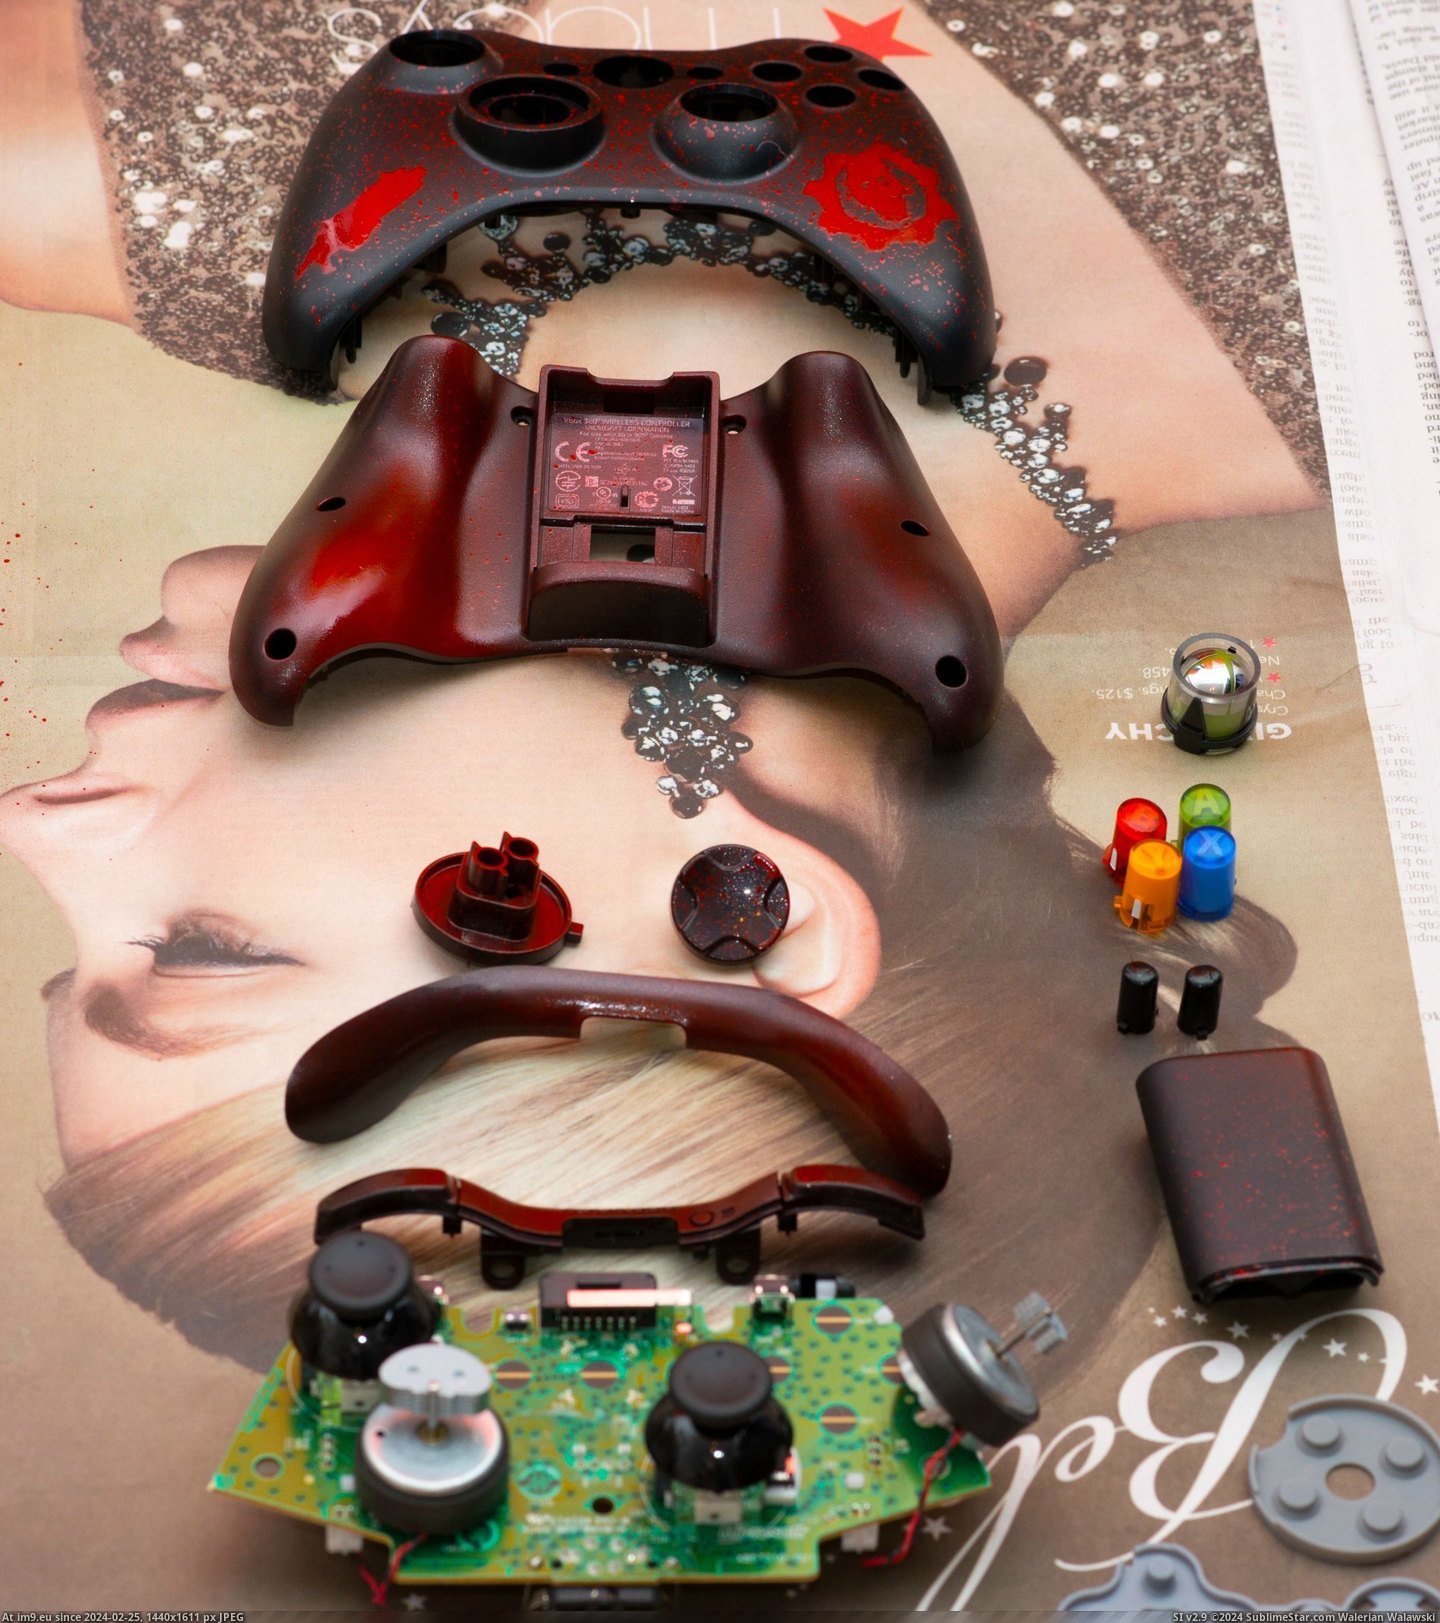 #Gaming #One #War #Controller #Redditor #Gears #Lucky #Painted #Xbox [Gaming] One lucky redditor is getting a custom painted Gears of War Xbox 360 controller! 1 Pic. (Bild von album My r/GAMING favs))